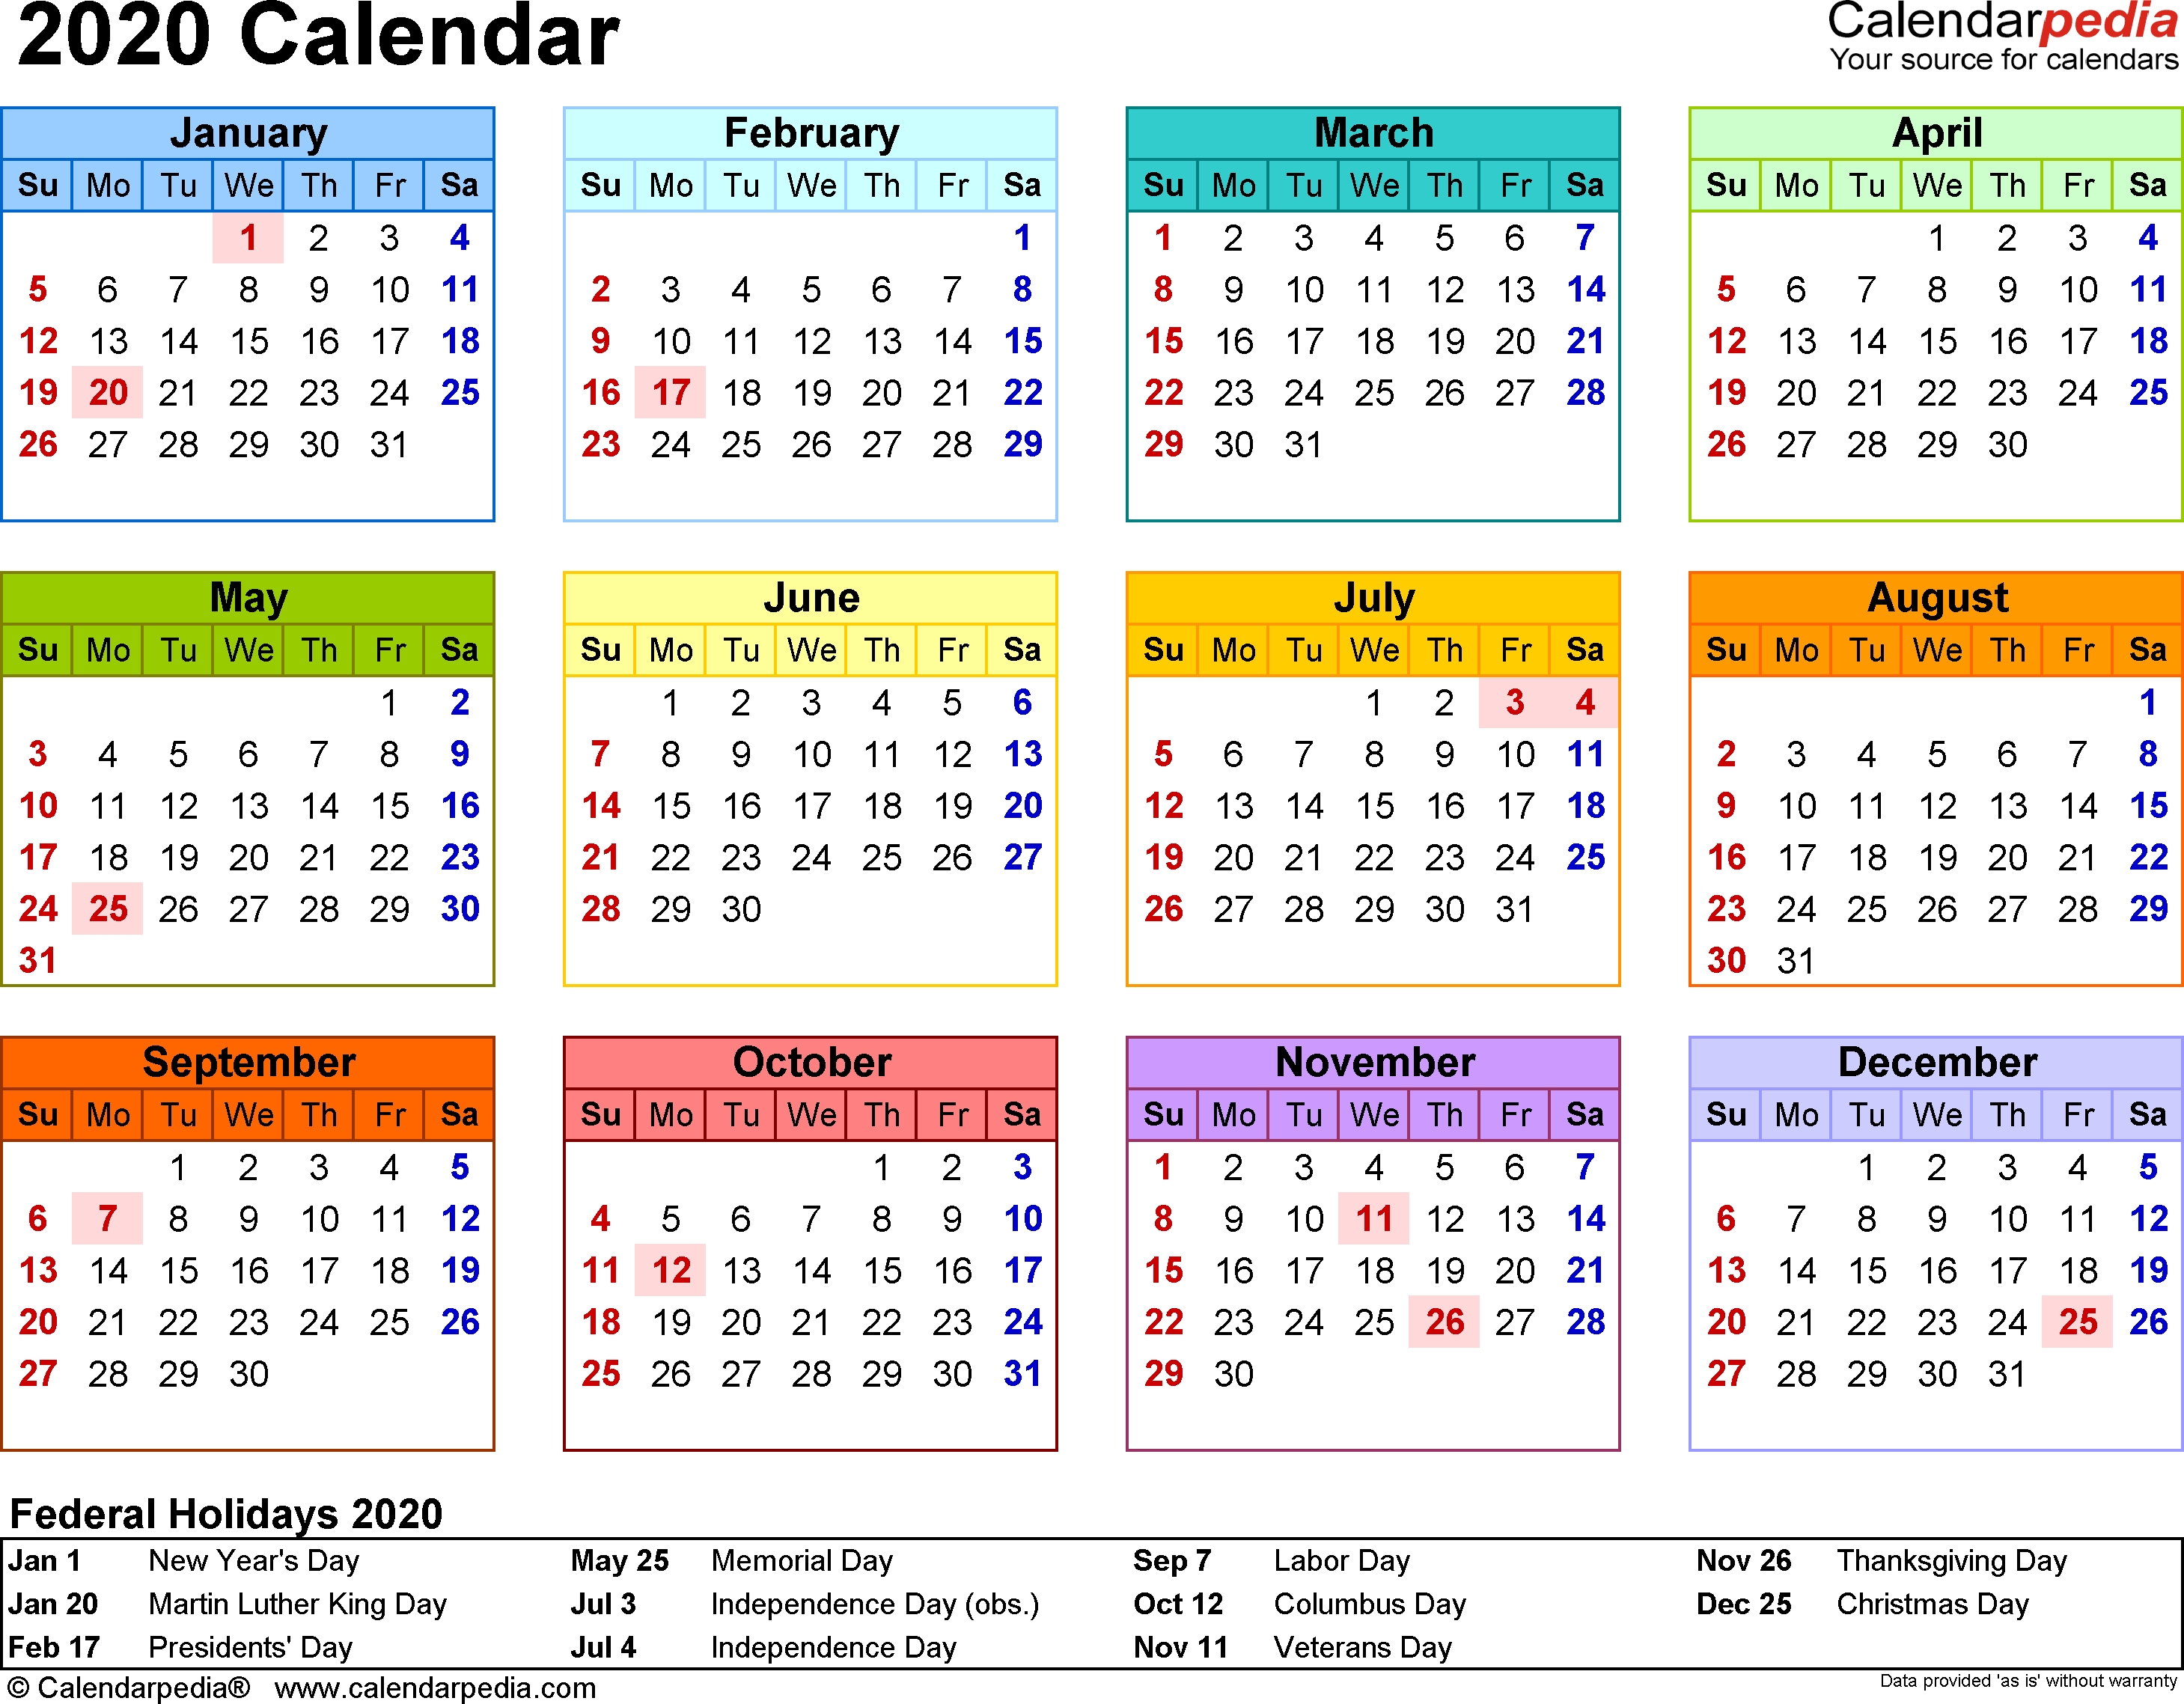 2020 Calendar Pdf - 17 Free Printable Calendar Templates 2020 Calendar Philippines With Holidays